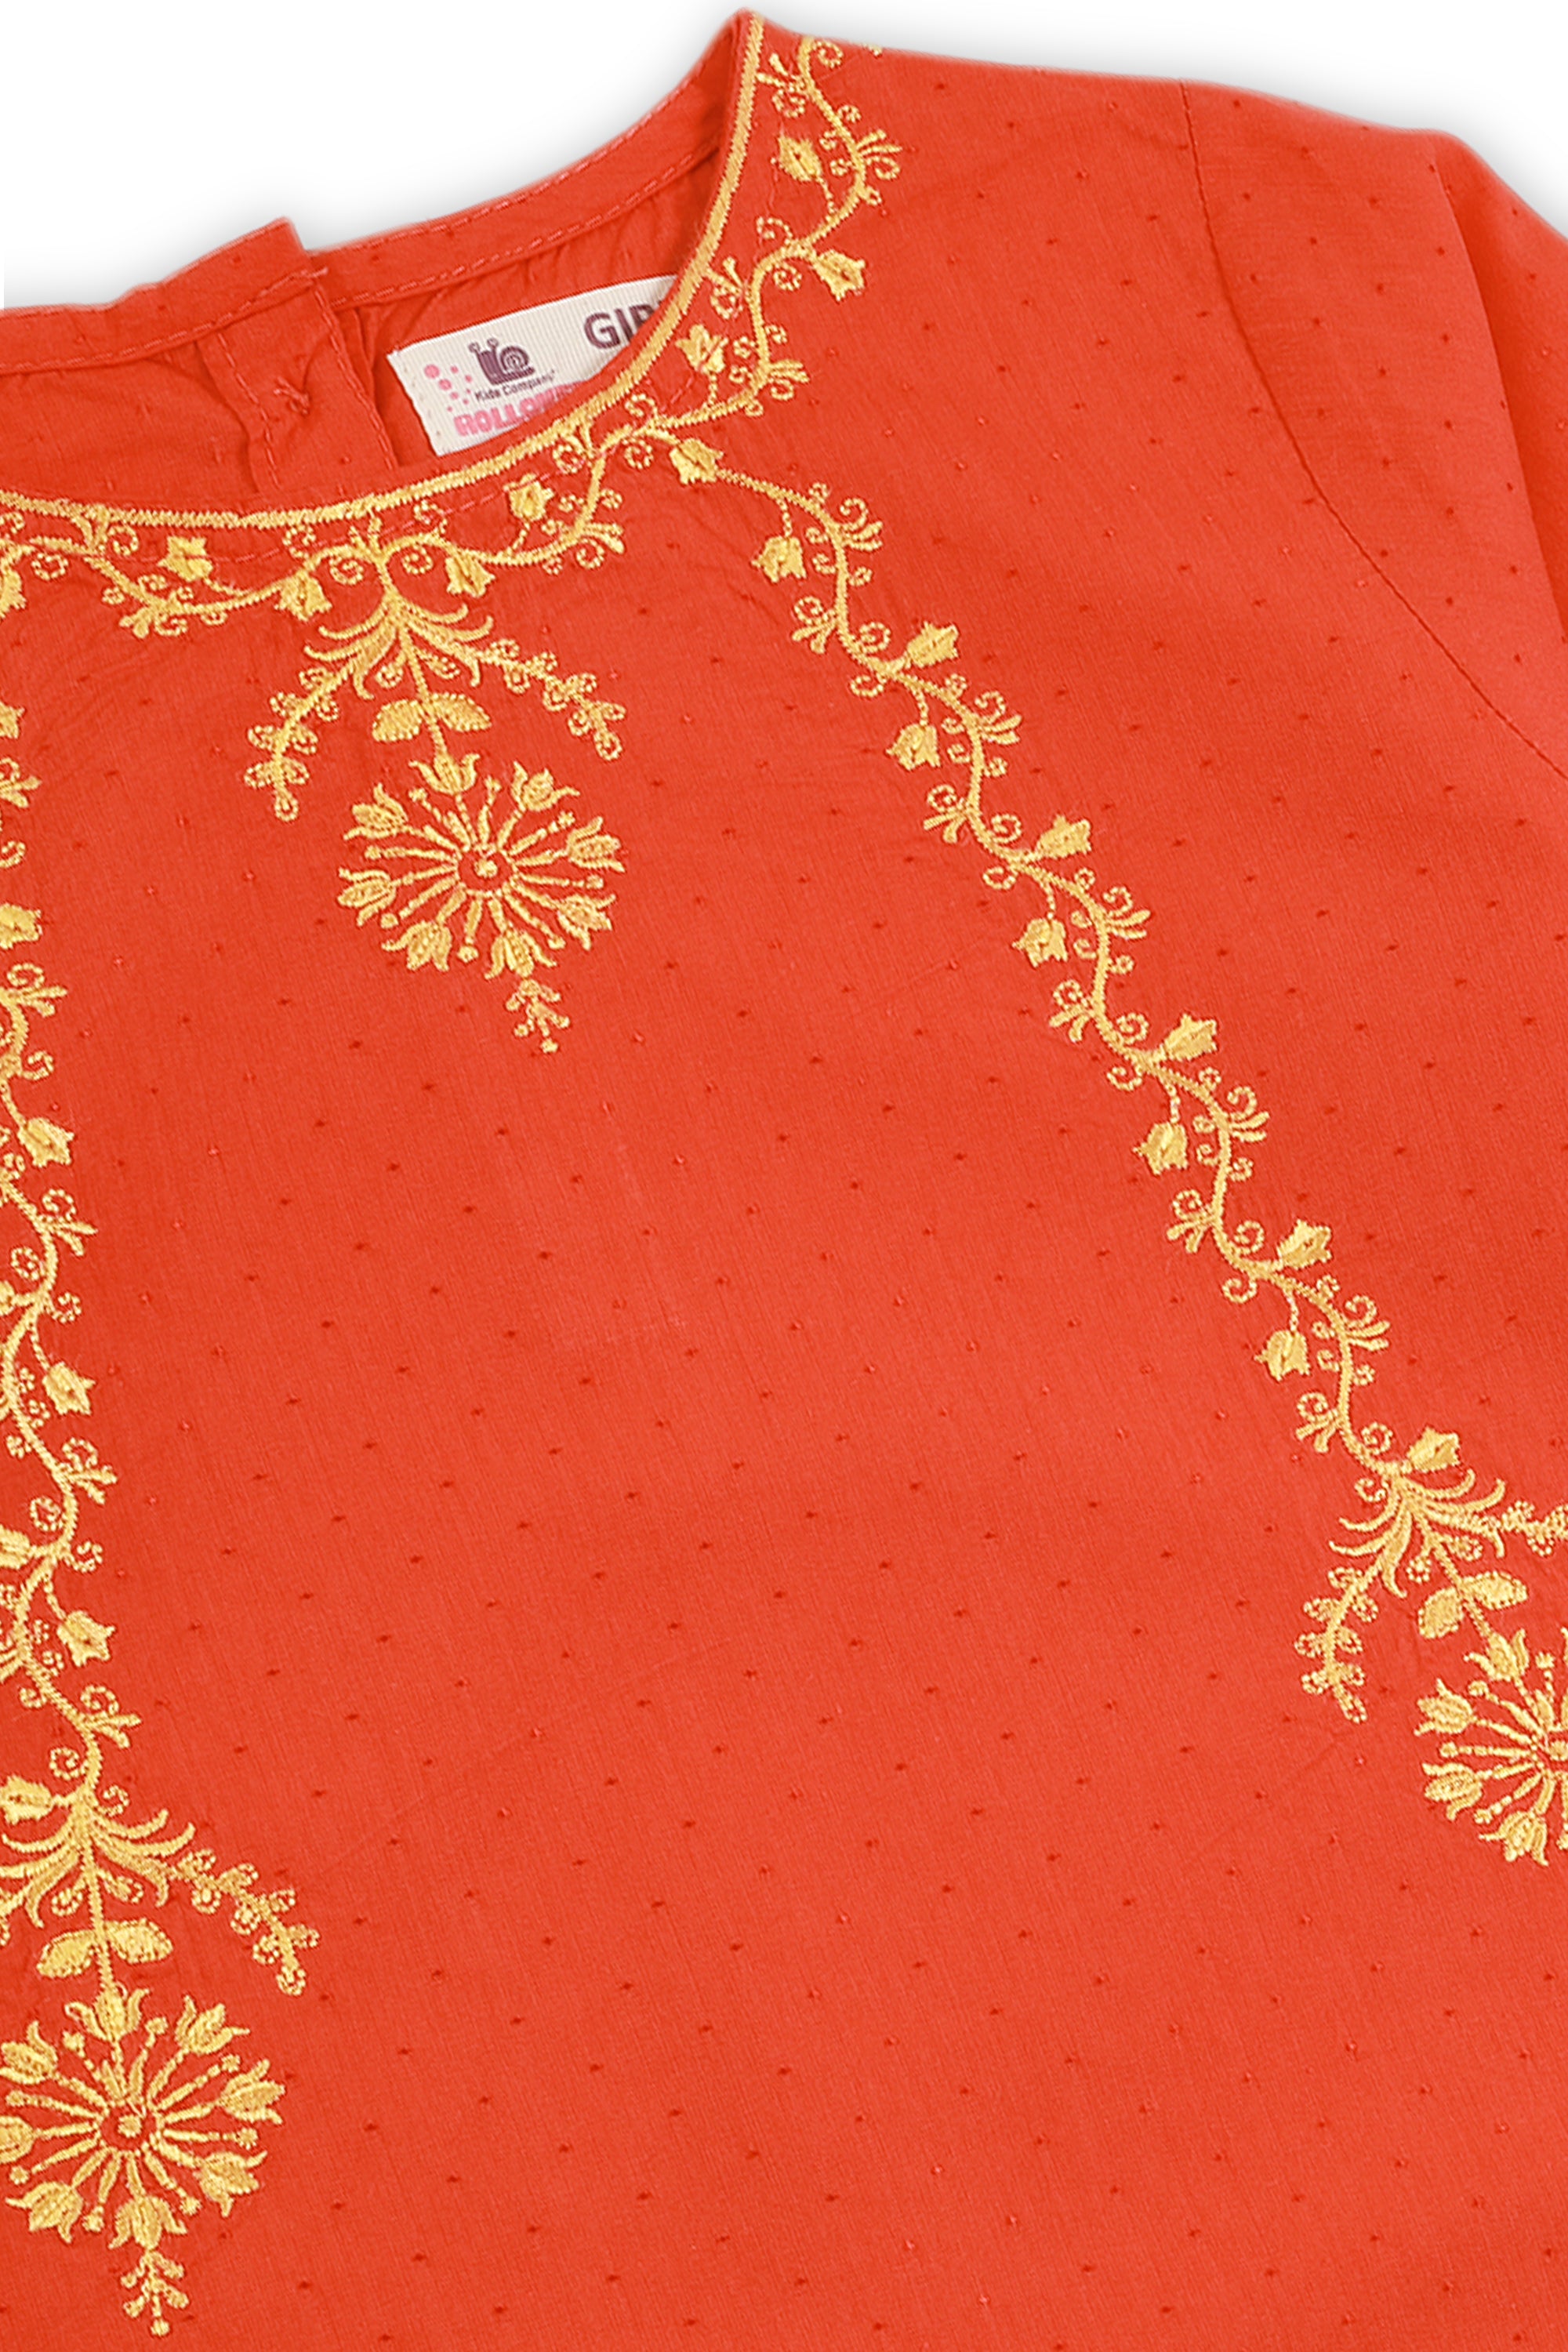 Harvest Gold Embroidered Orangey Red Kurti for Girls